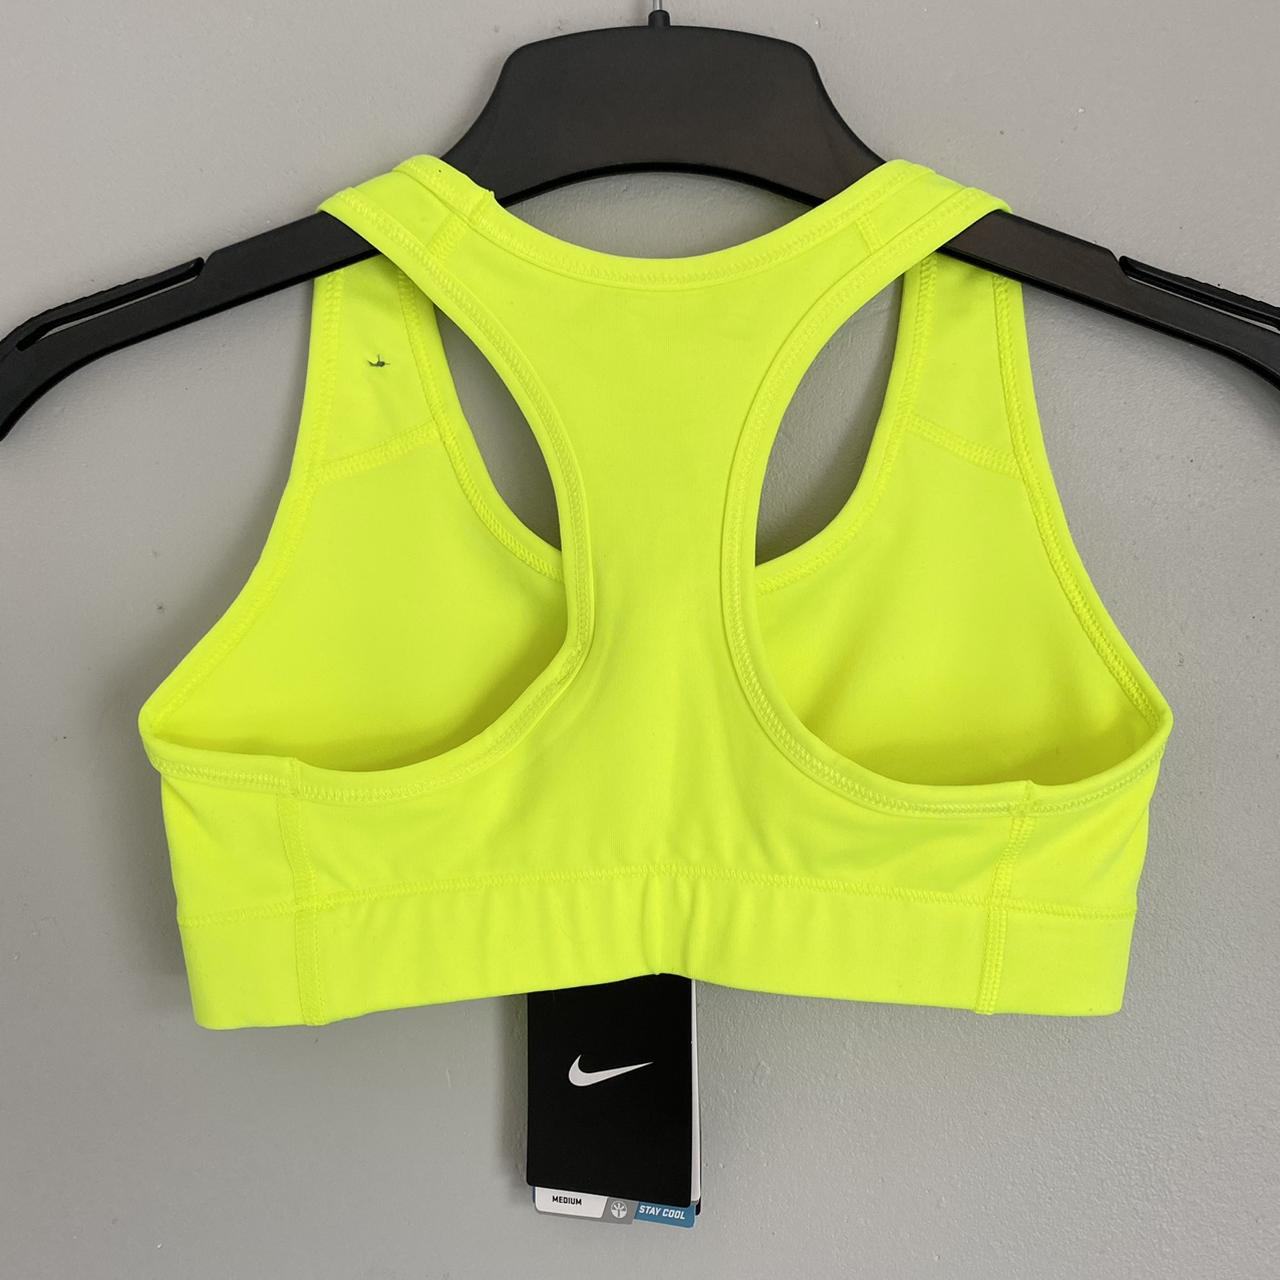 Nike Sports Bra Yellow - $10 - From Maggie